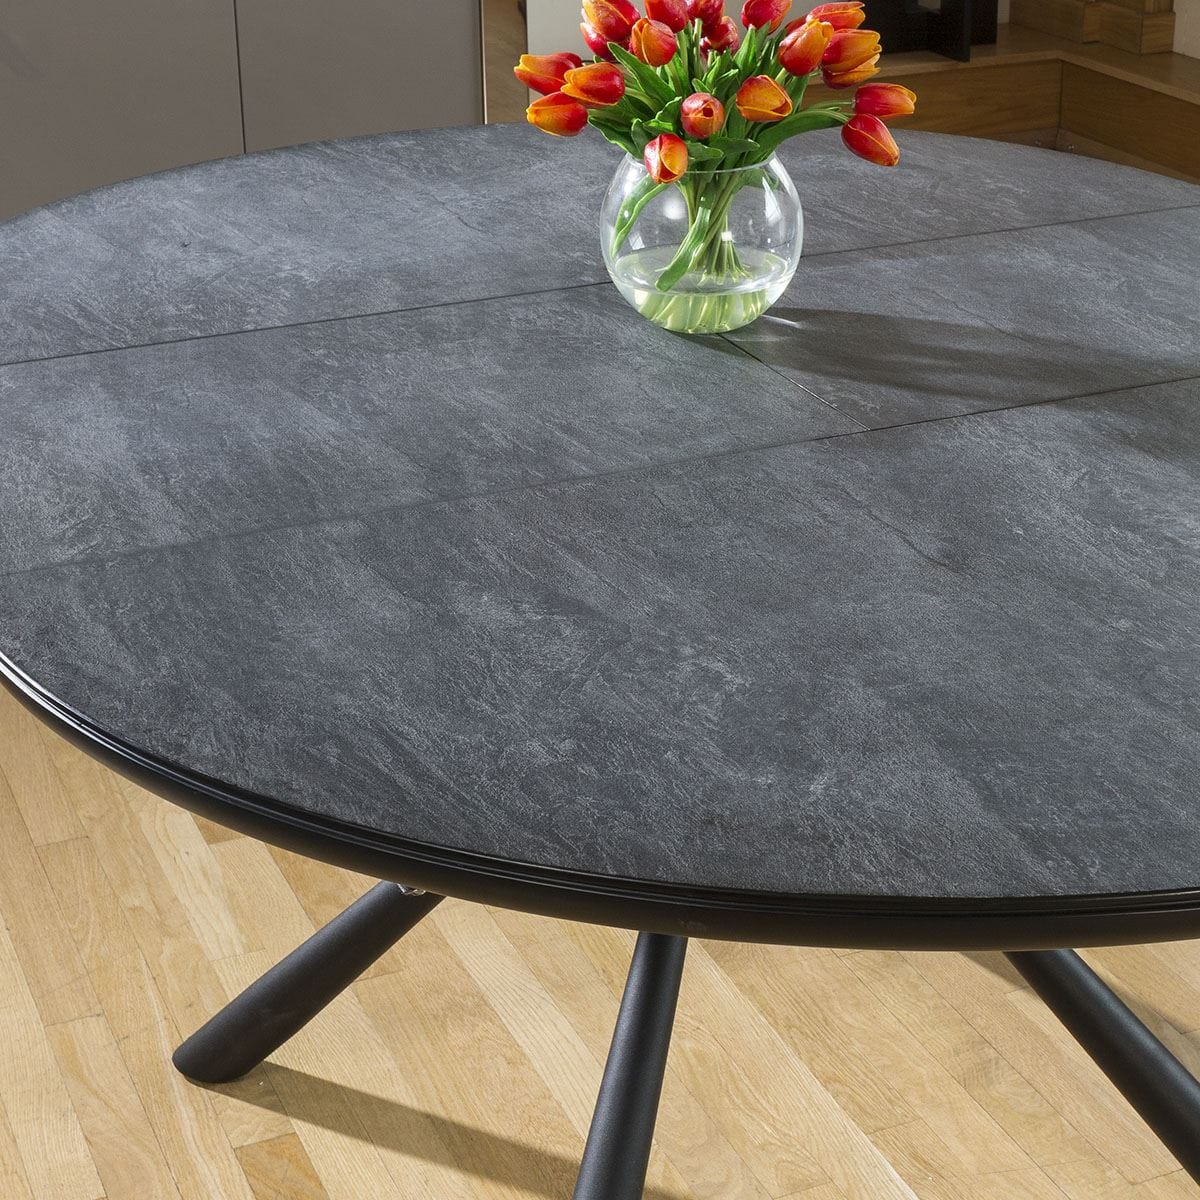 Quatropi Modern Dining Table Round Oval Extending 120-160cm Granite Effect Top